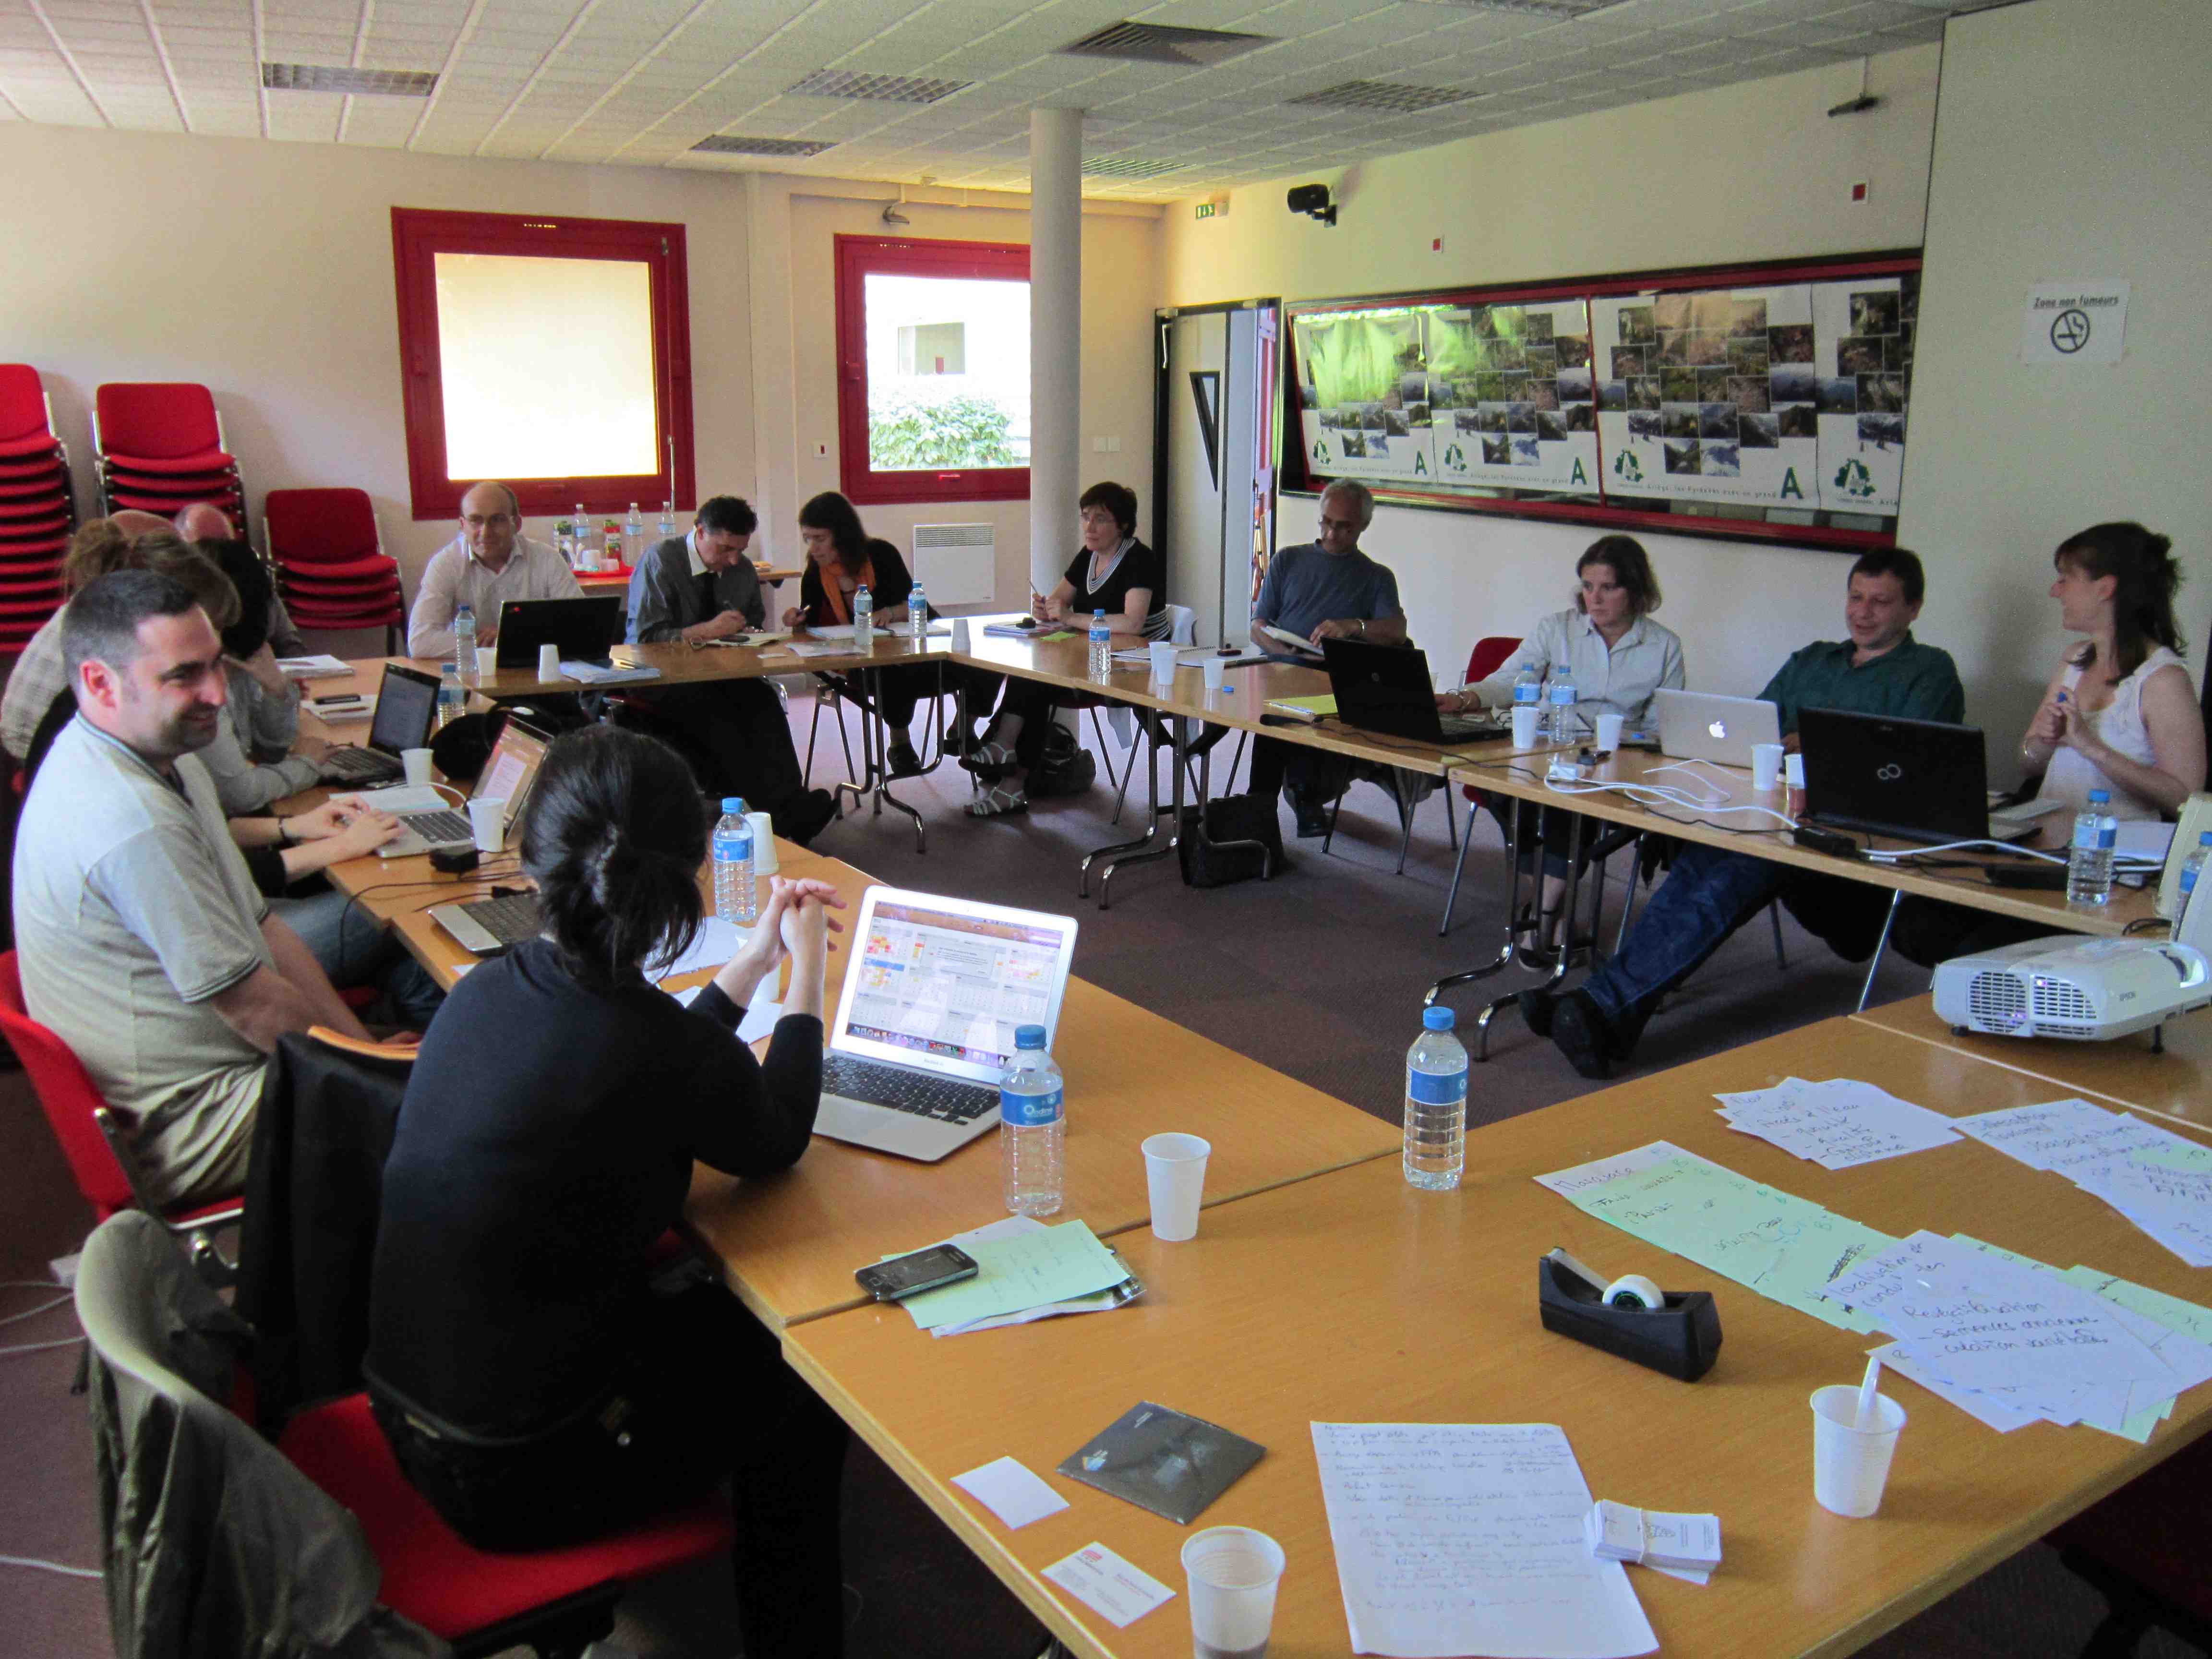 AGRIPIR workshop in Vitoria, 17th October